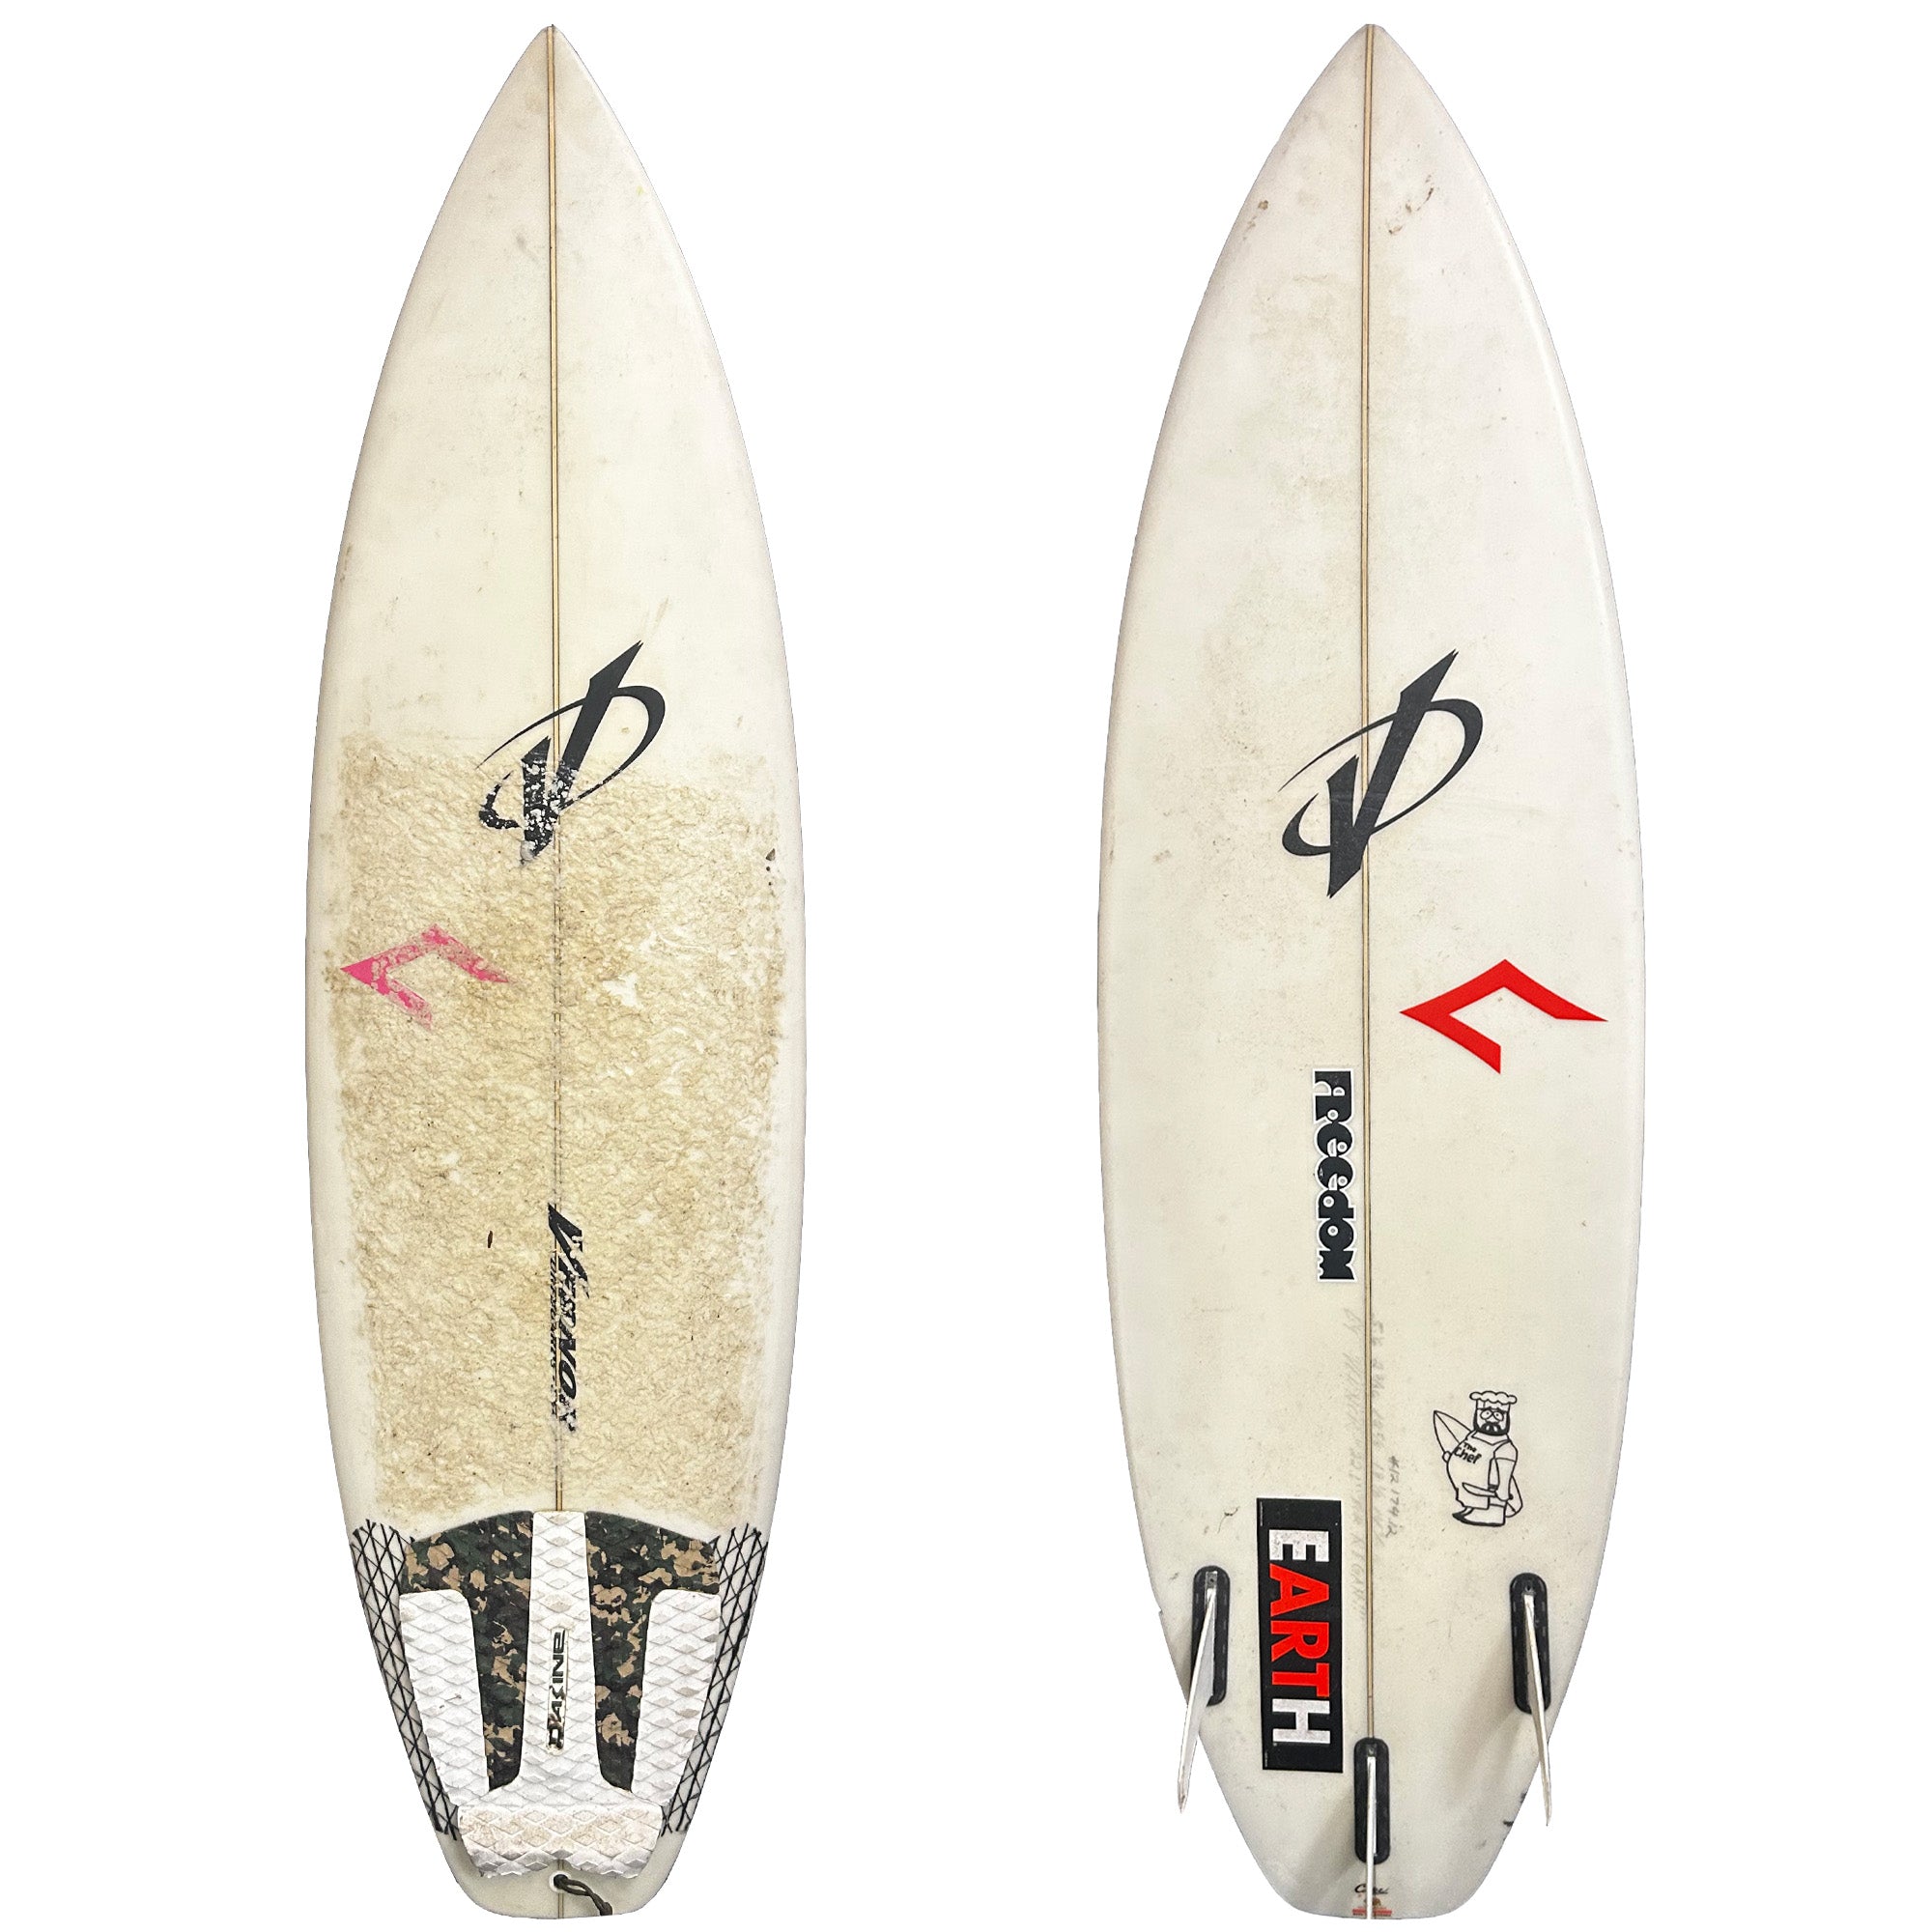 Vernon 5'6 Consignment Surfboard